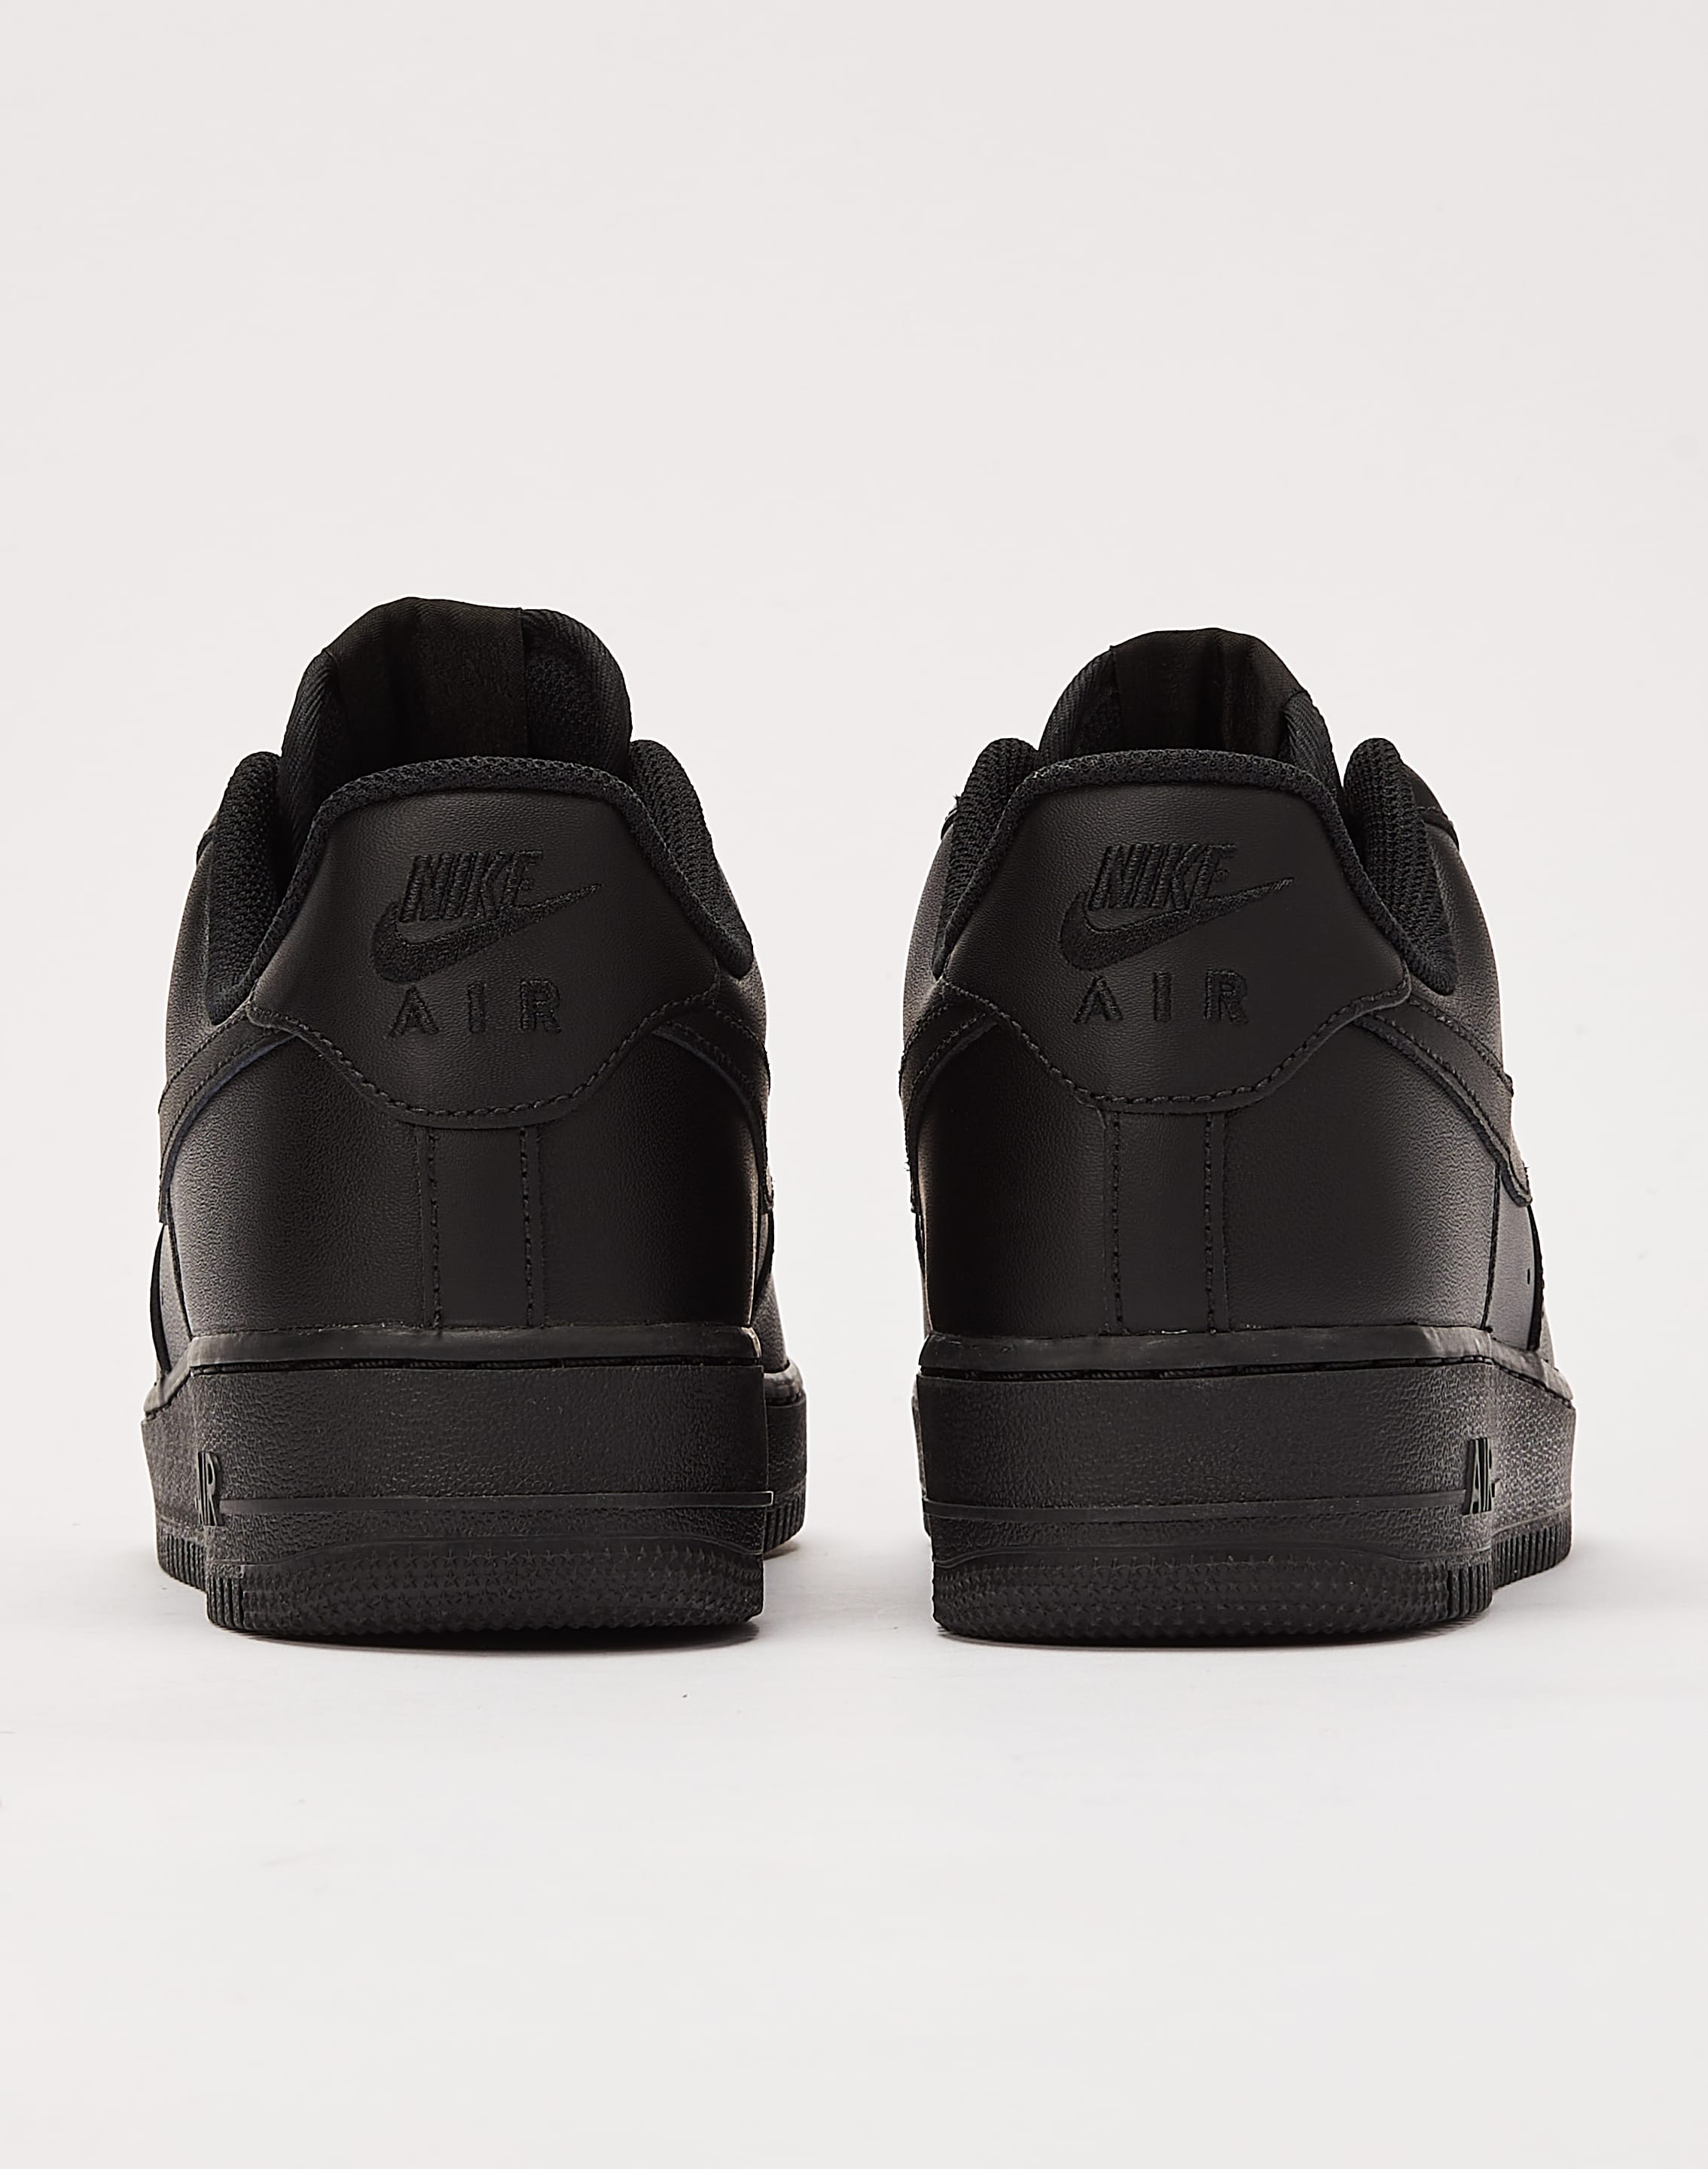 Air Force 1 '07 'Triple Black' - Nike - CW2288 001 - black/black